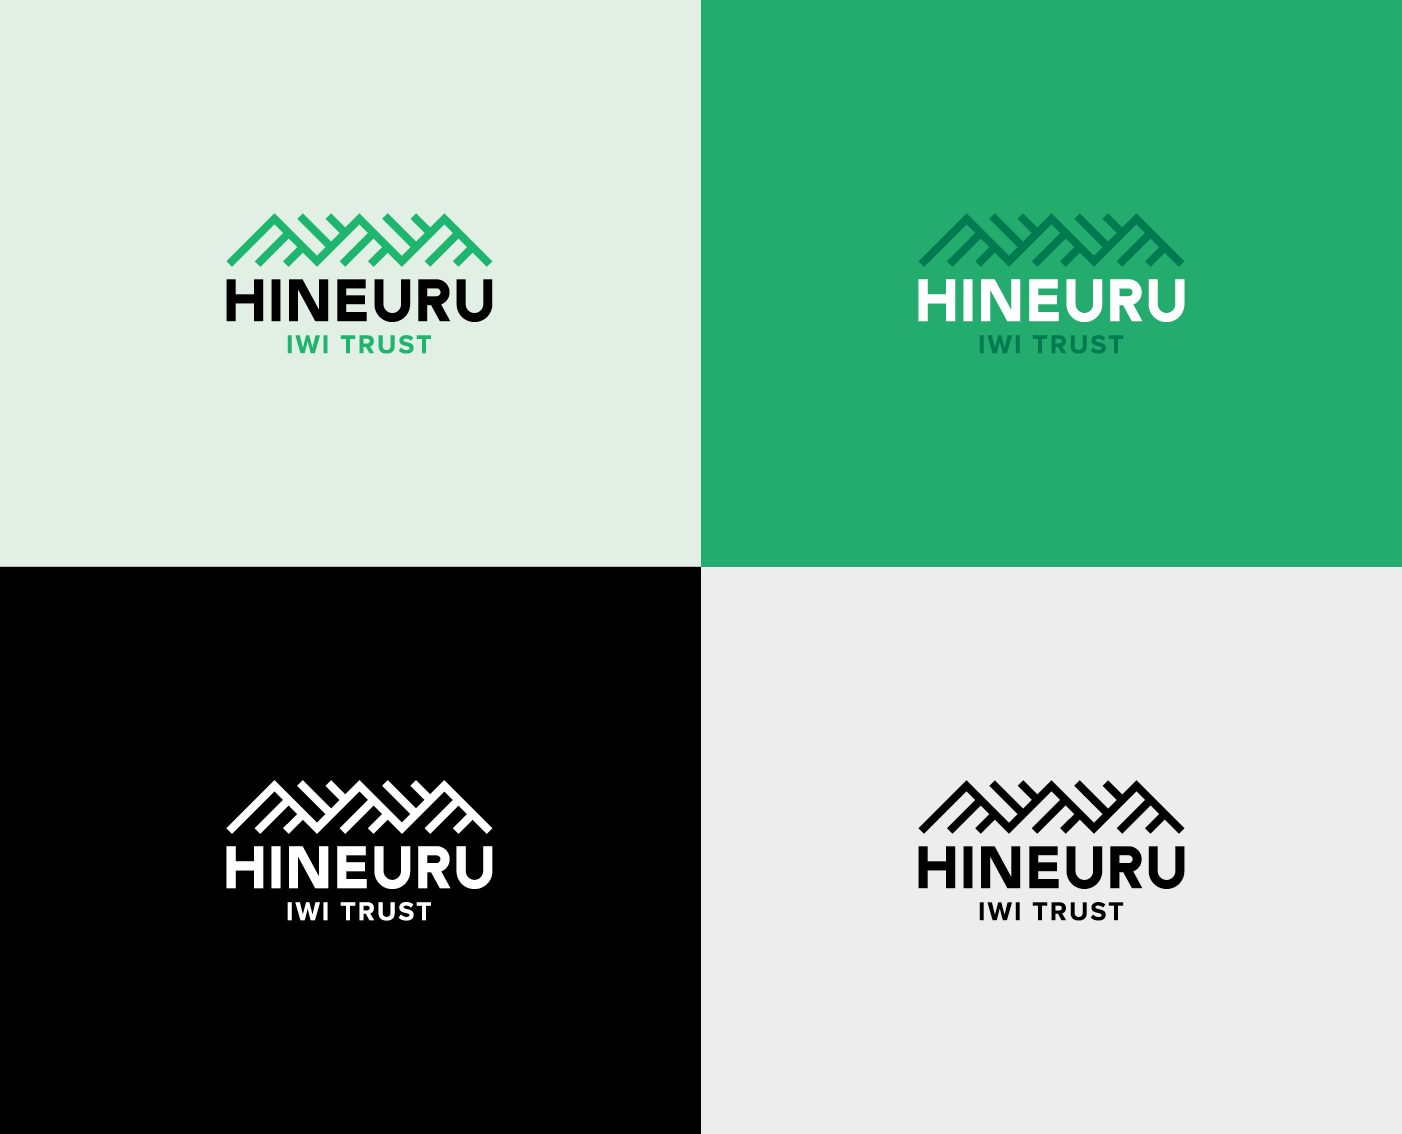 Hineuru Iwi Trust logo